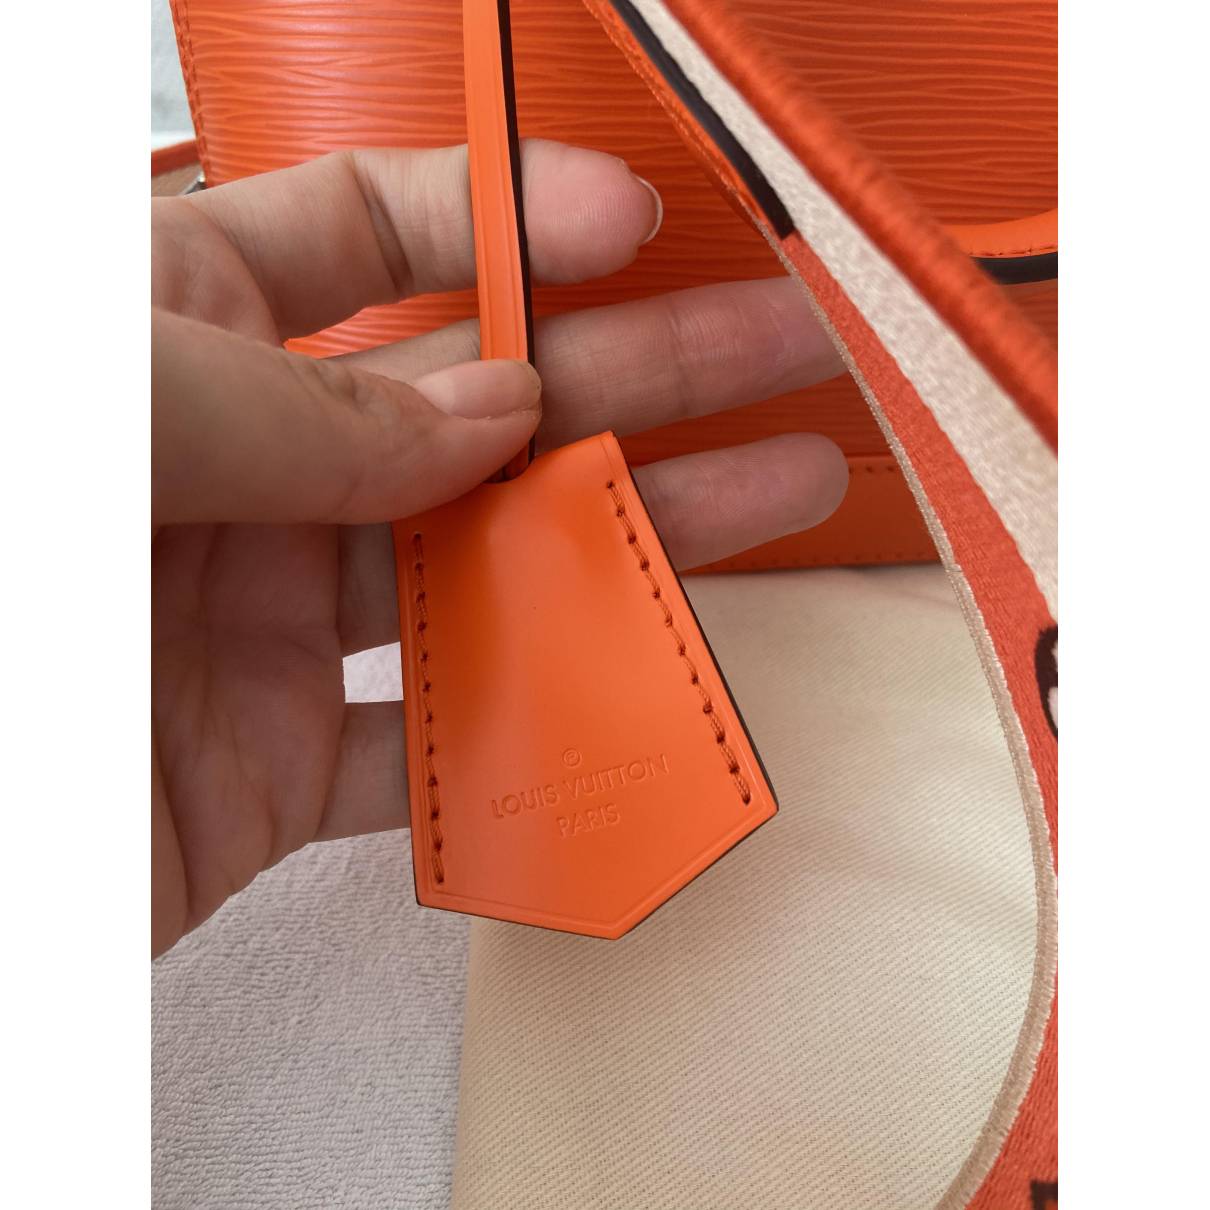 Louis Vuitton - Authenticated Alma BB Handbag - Leather Orange Plain For Woman, Never Worn